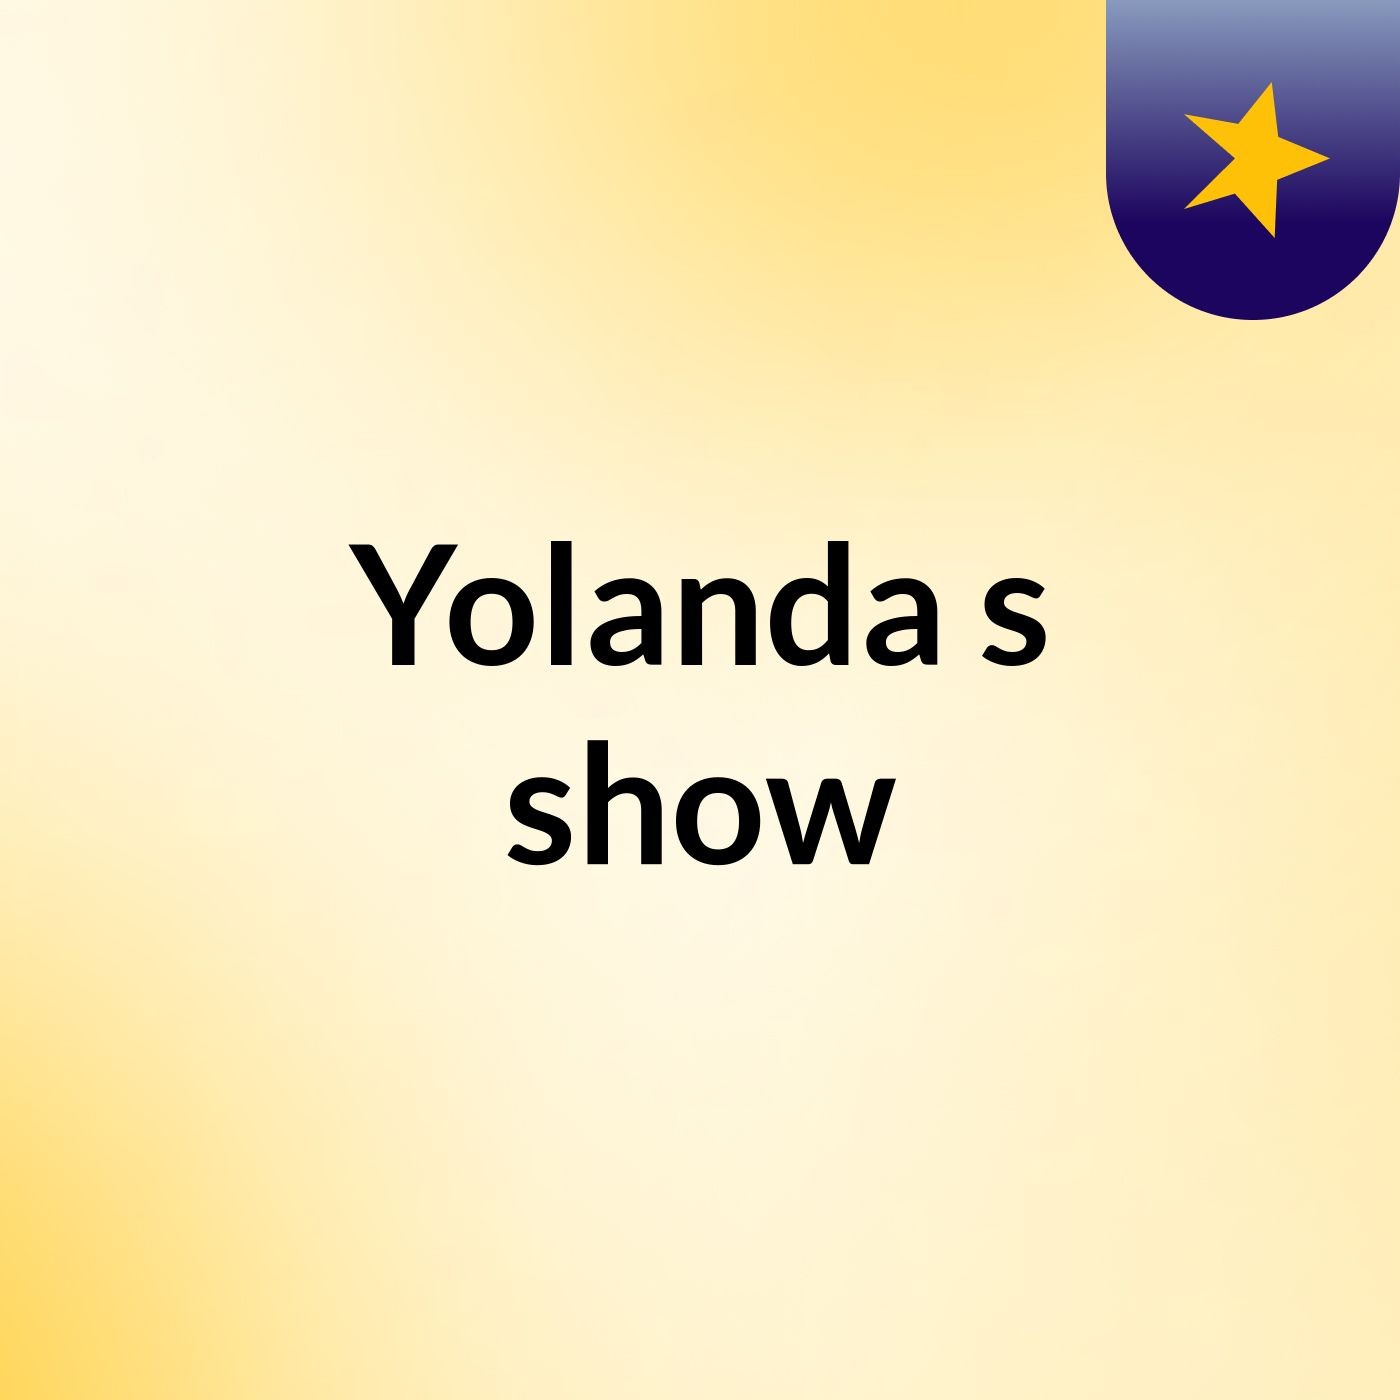 Yolanda's show